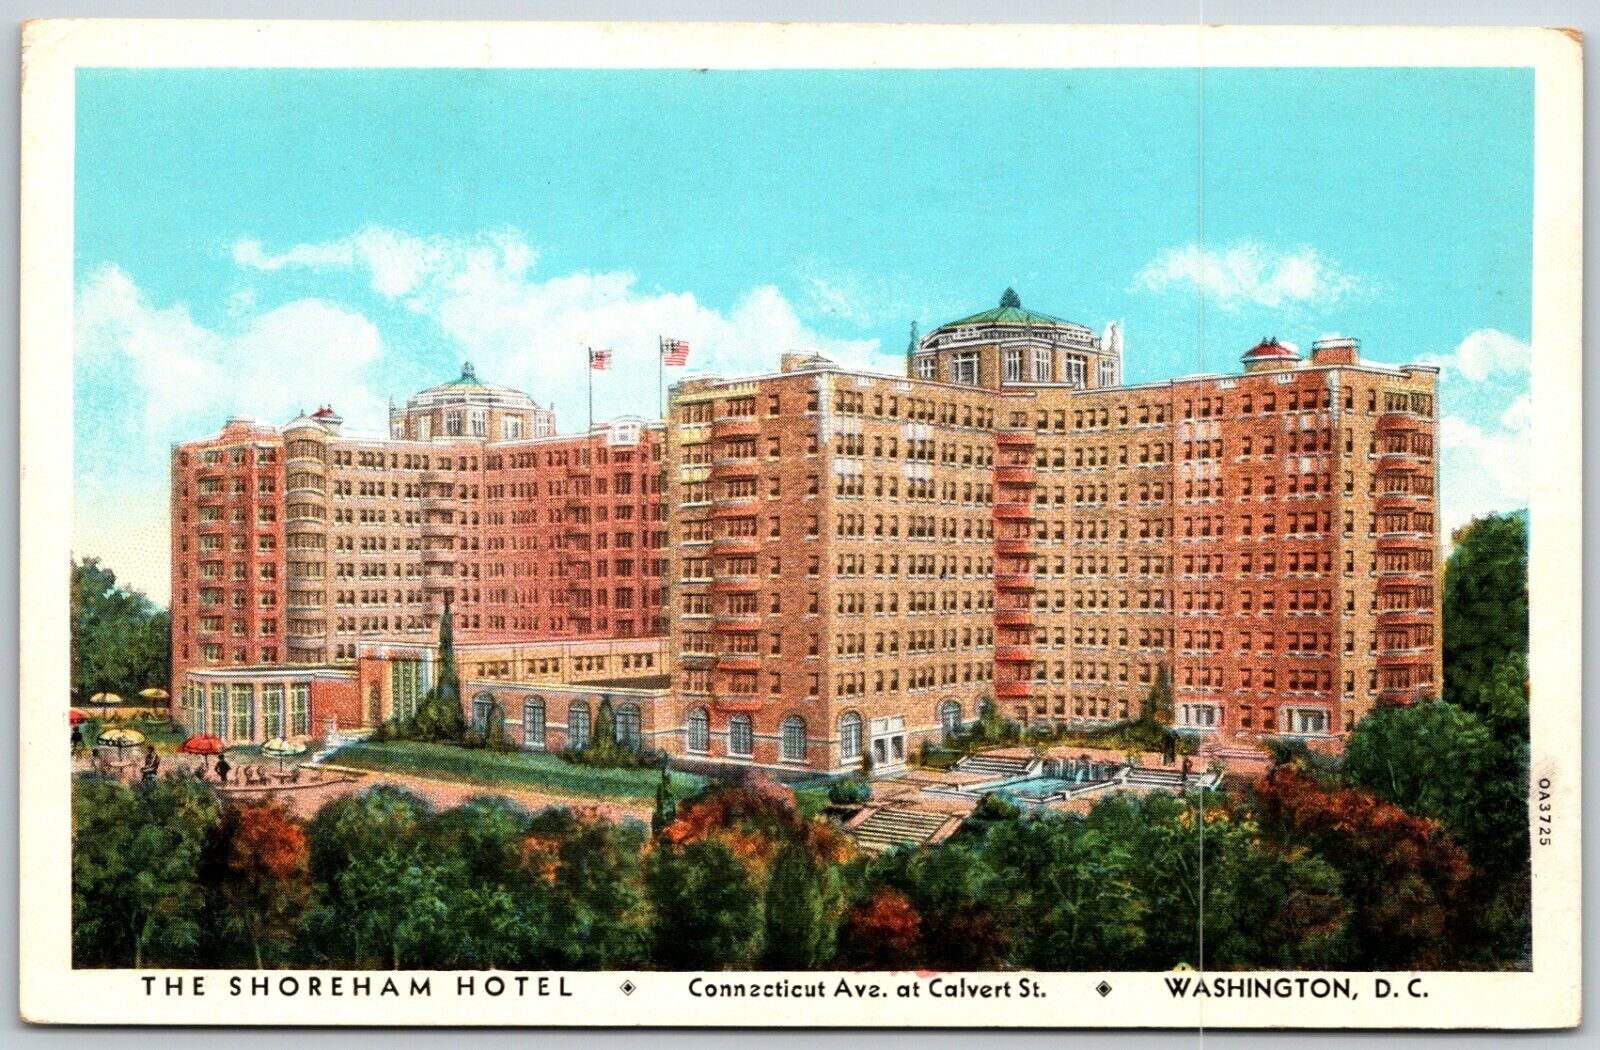 Shoreham Hotel, Connecticut Ave at Calvert St., Washington, DC - Postcard